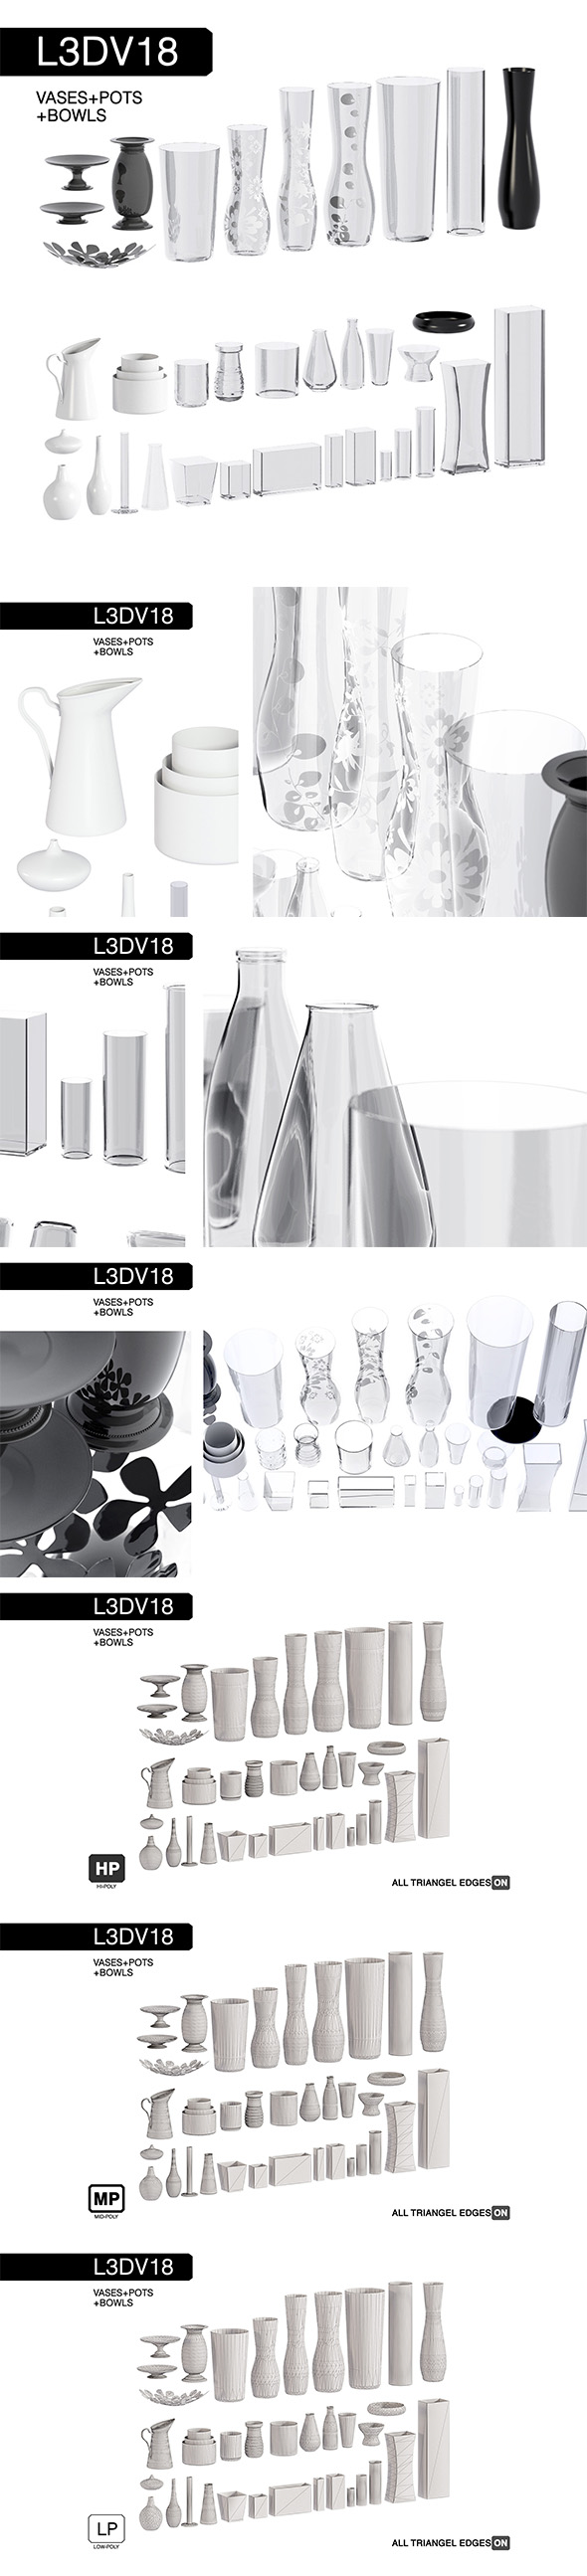 L3DV18G01 - vases - 3Docean 25356860